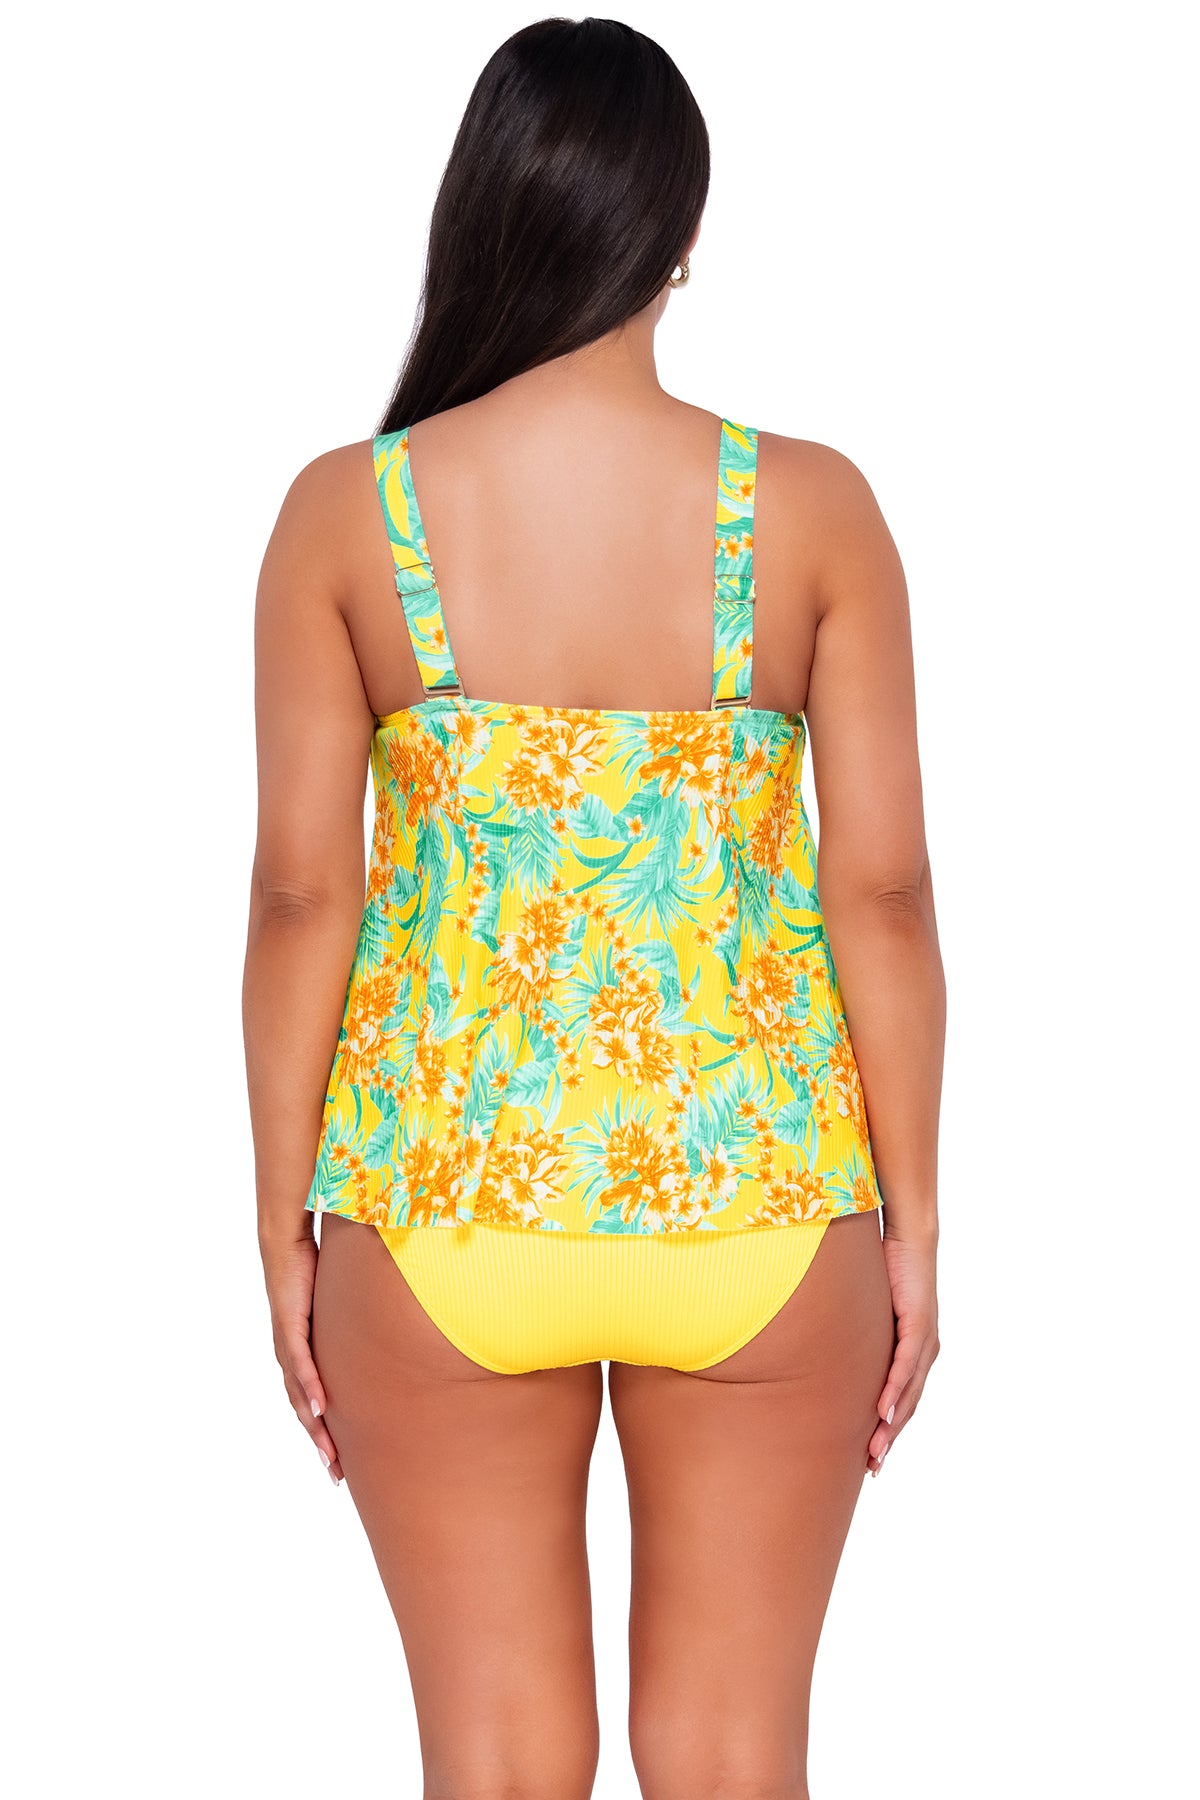 Back pose #1 of Nicki wearing Sunsets Escape Golden Tropics Sandbar Rib Sadie Tankini Top with matching Hannah High Waist bikini bottom